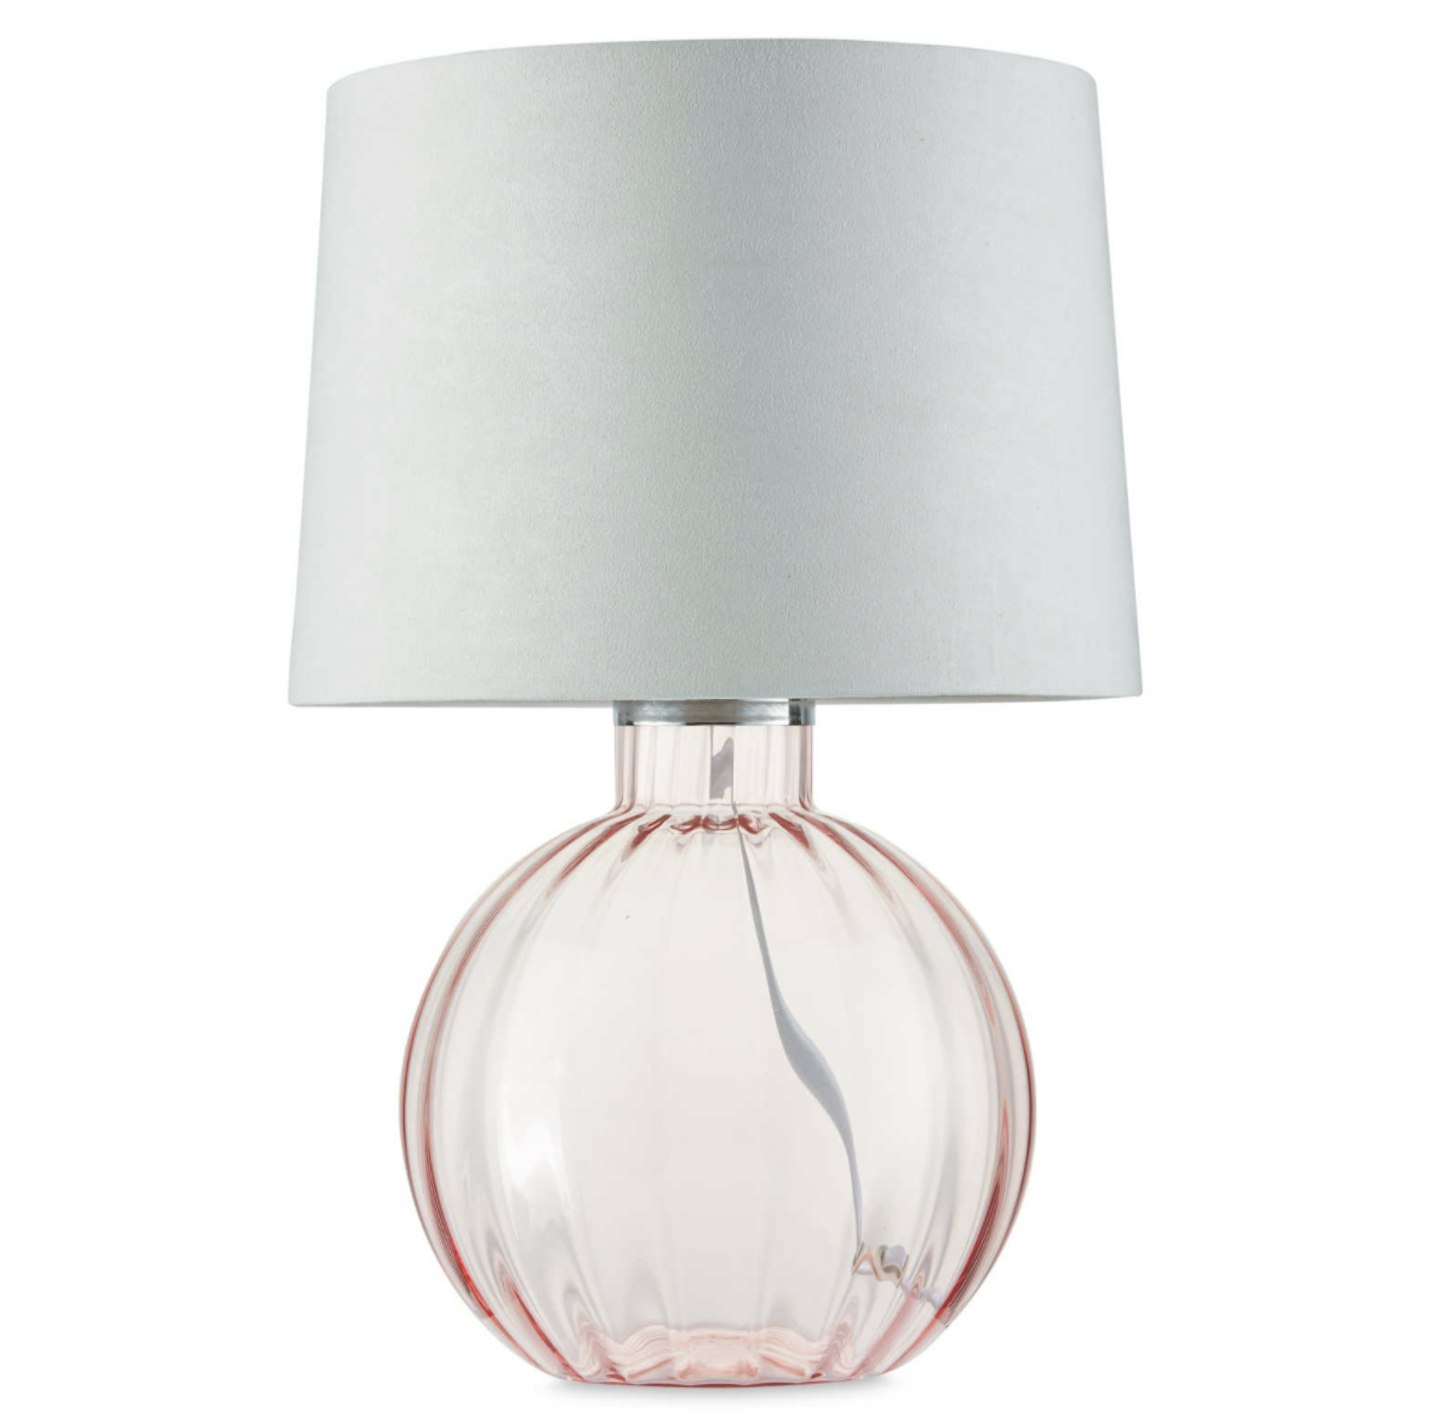 Kirkton House Pink Glass Lamp